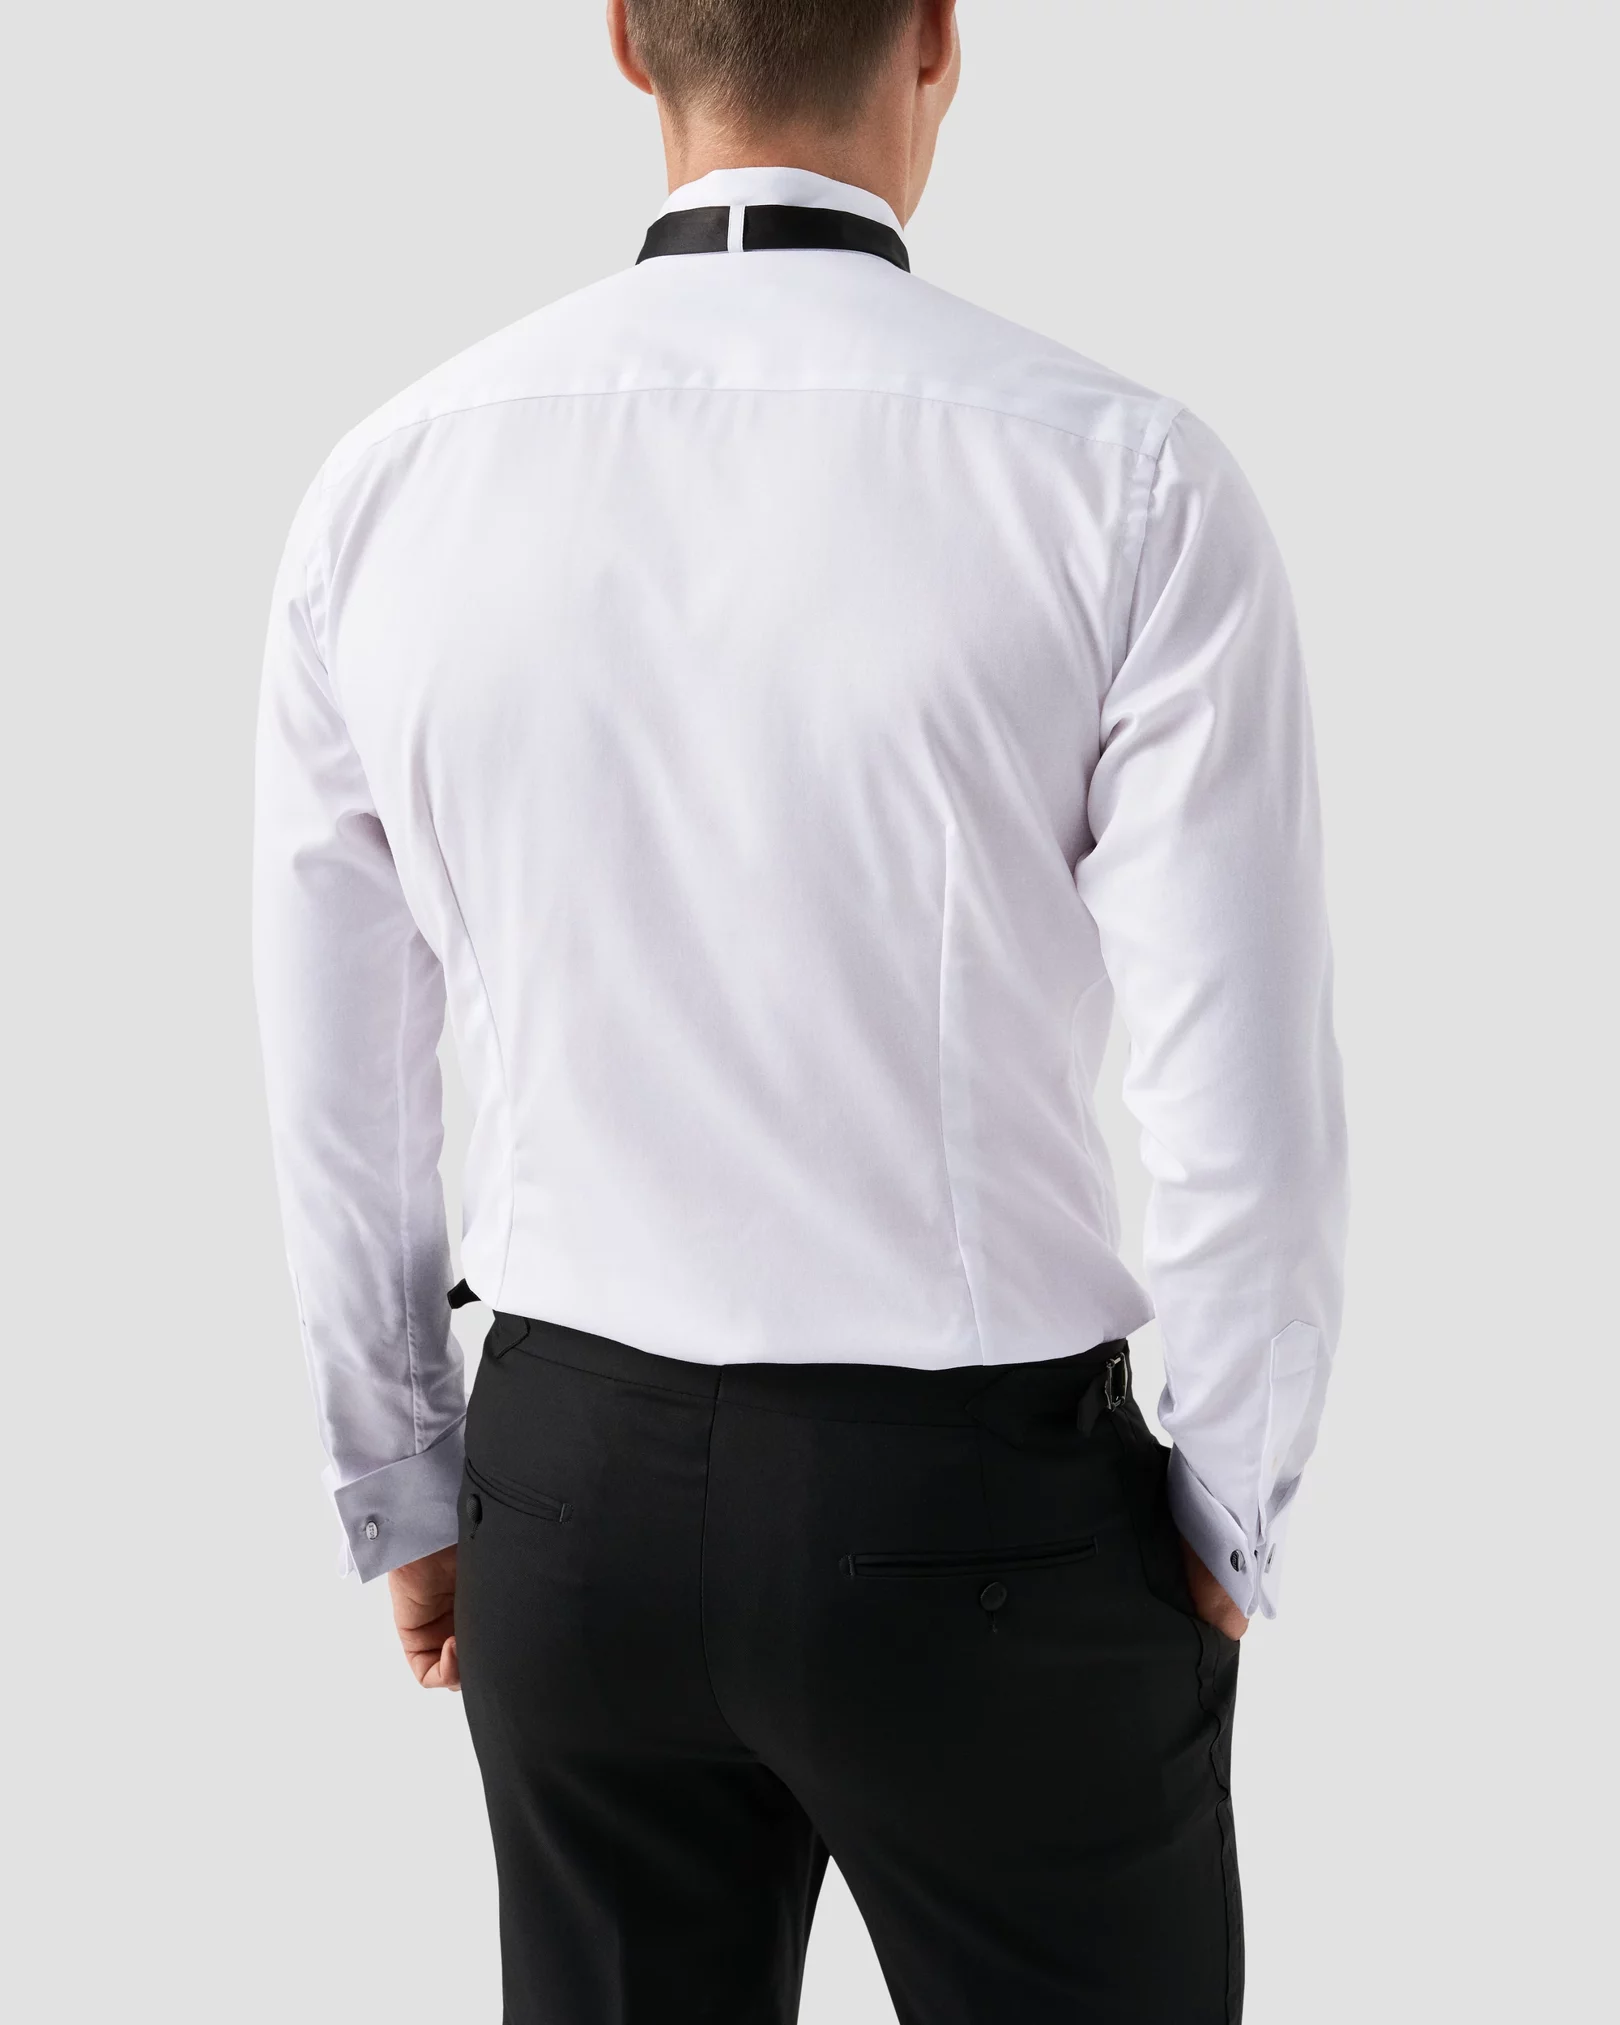 Eton - White Signature Twill Tuxedo Shirt